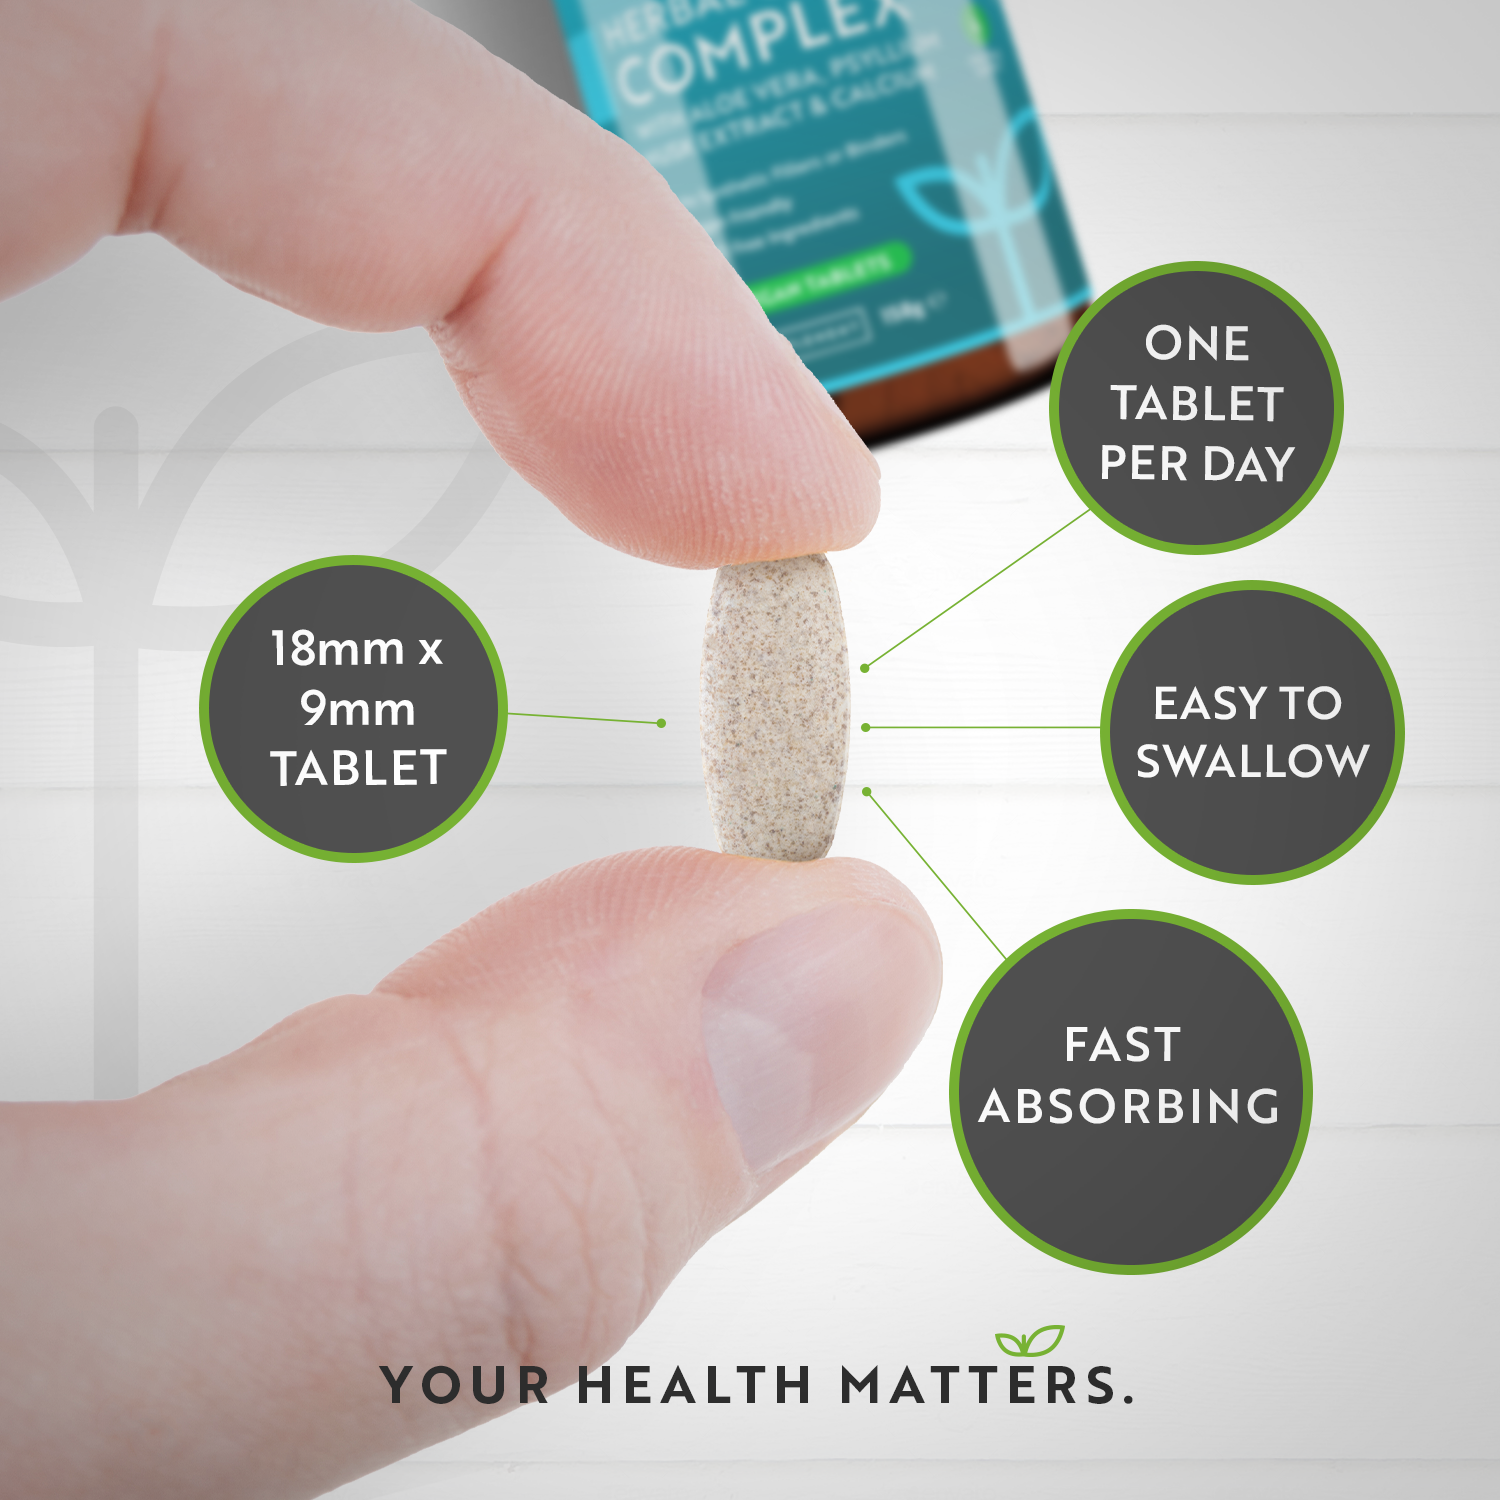 Herbal Colon Cleanse Complex 120 Vegan Tablets